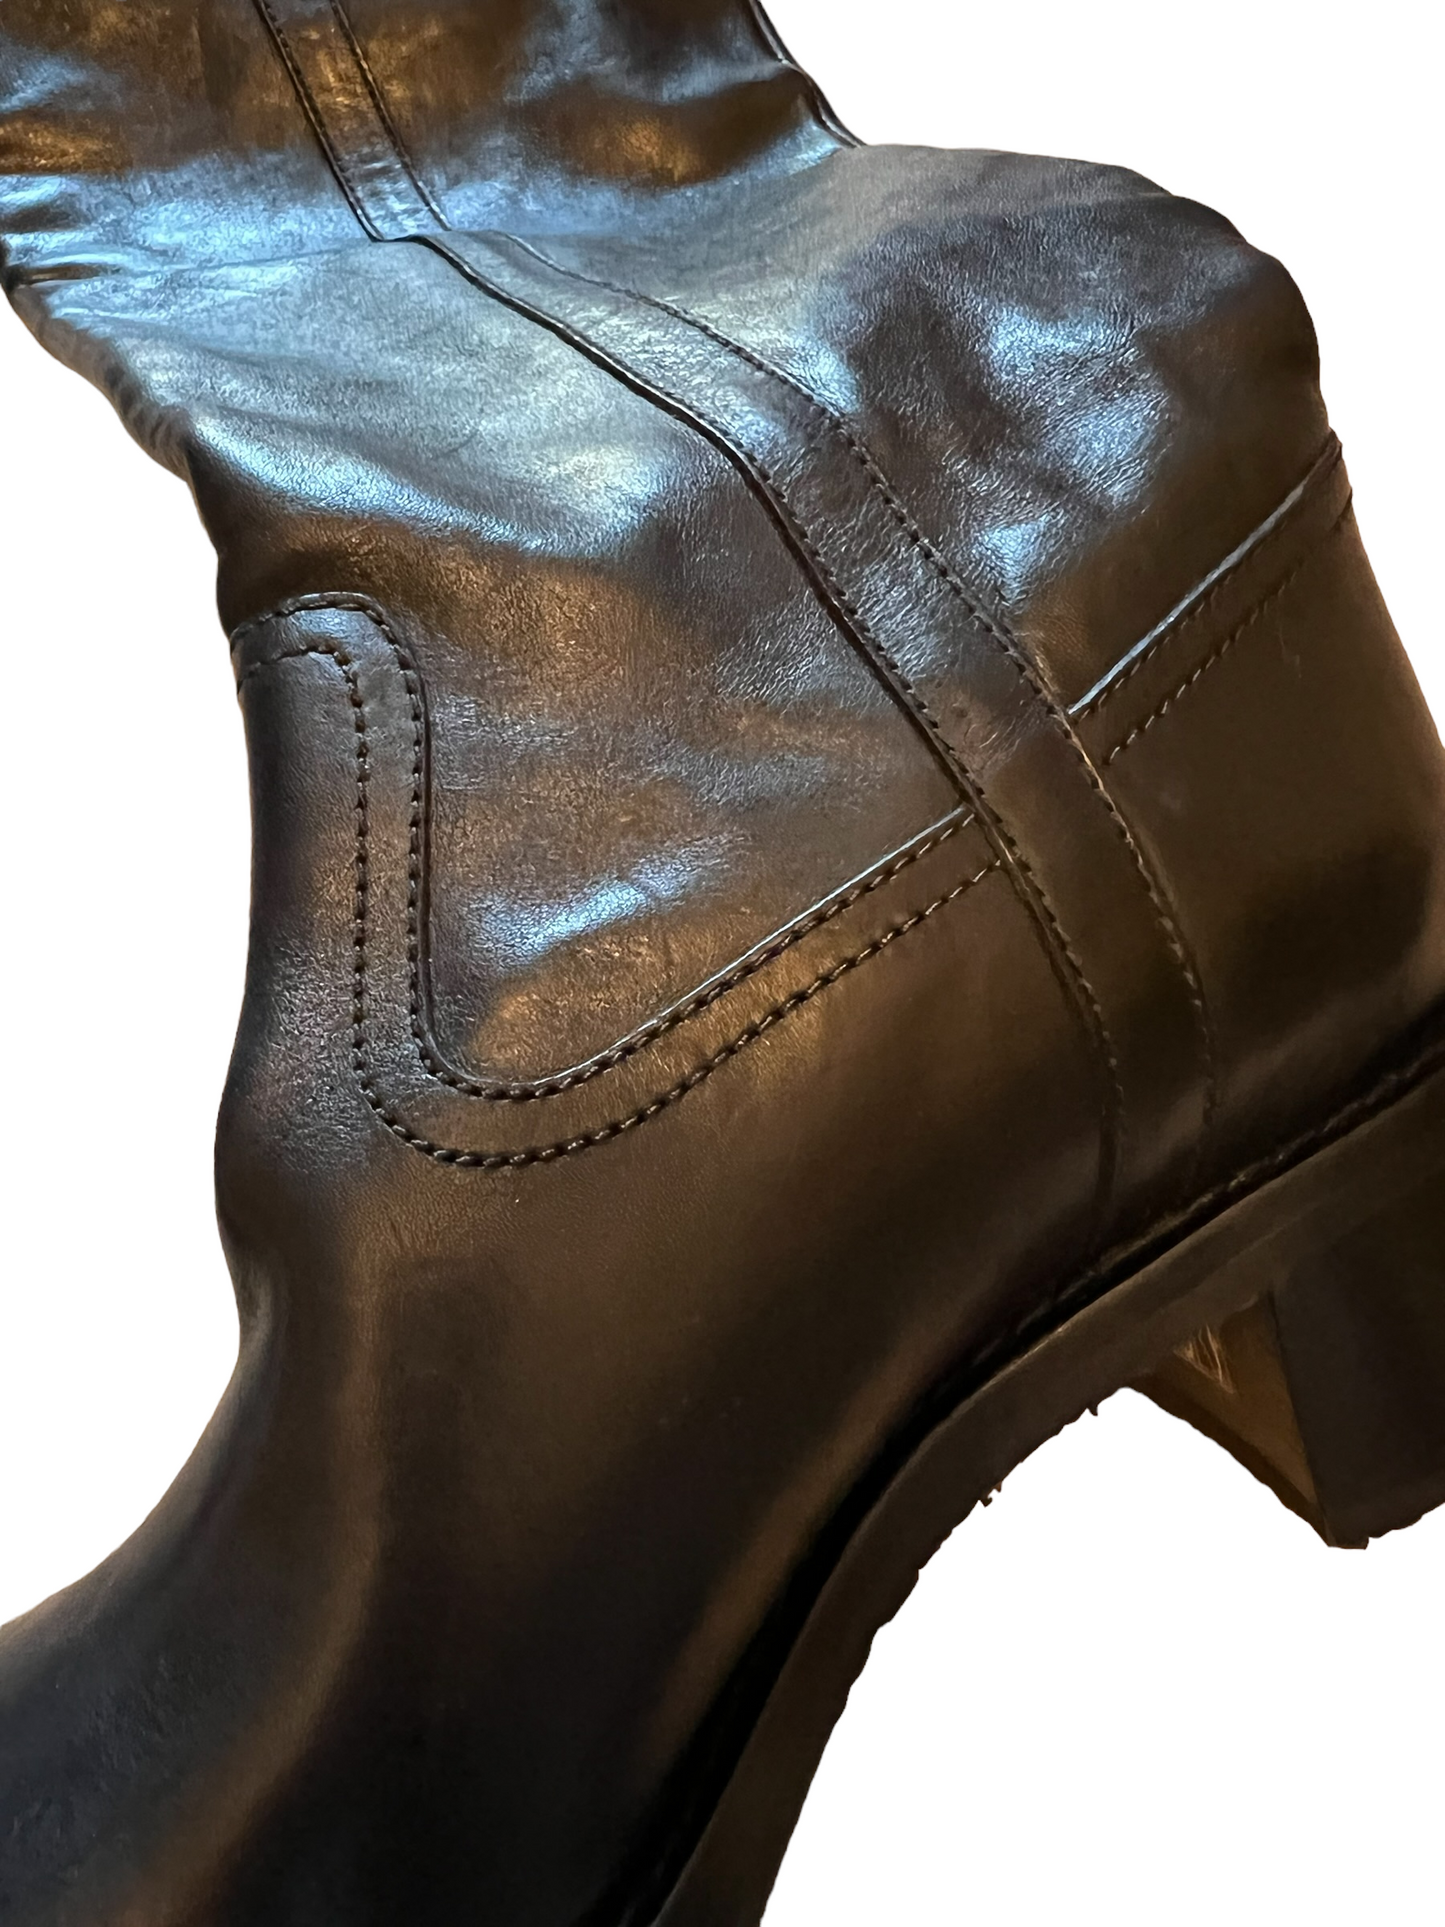 Celine Black Foldover OTK Folco Shearling Size 39 Boots